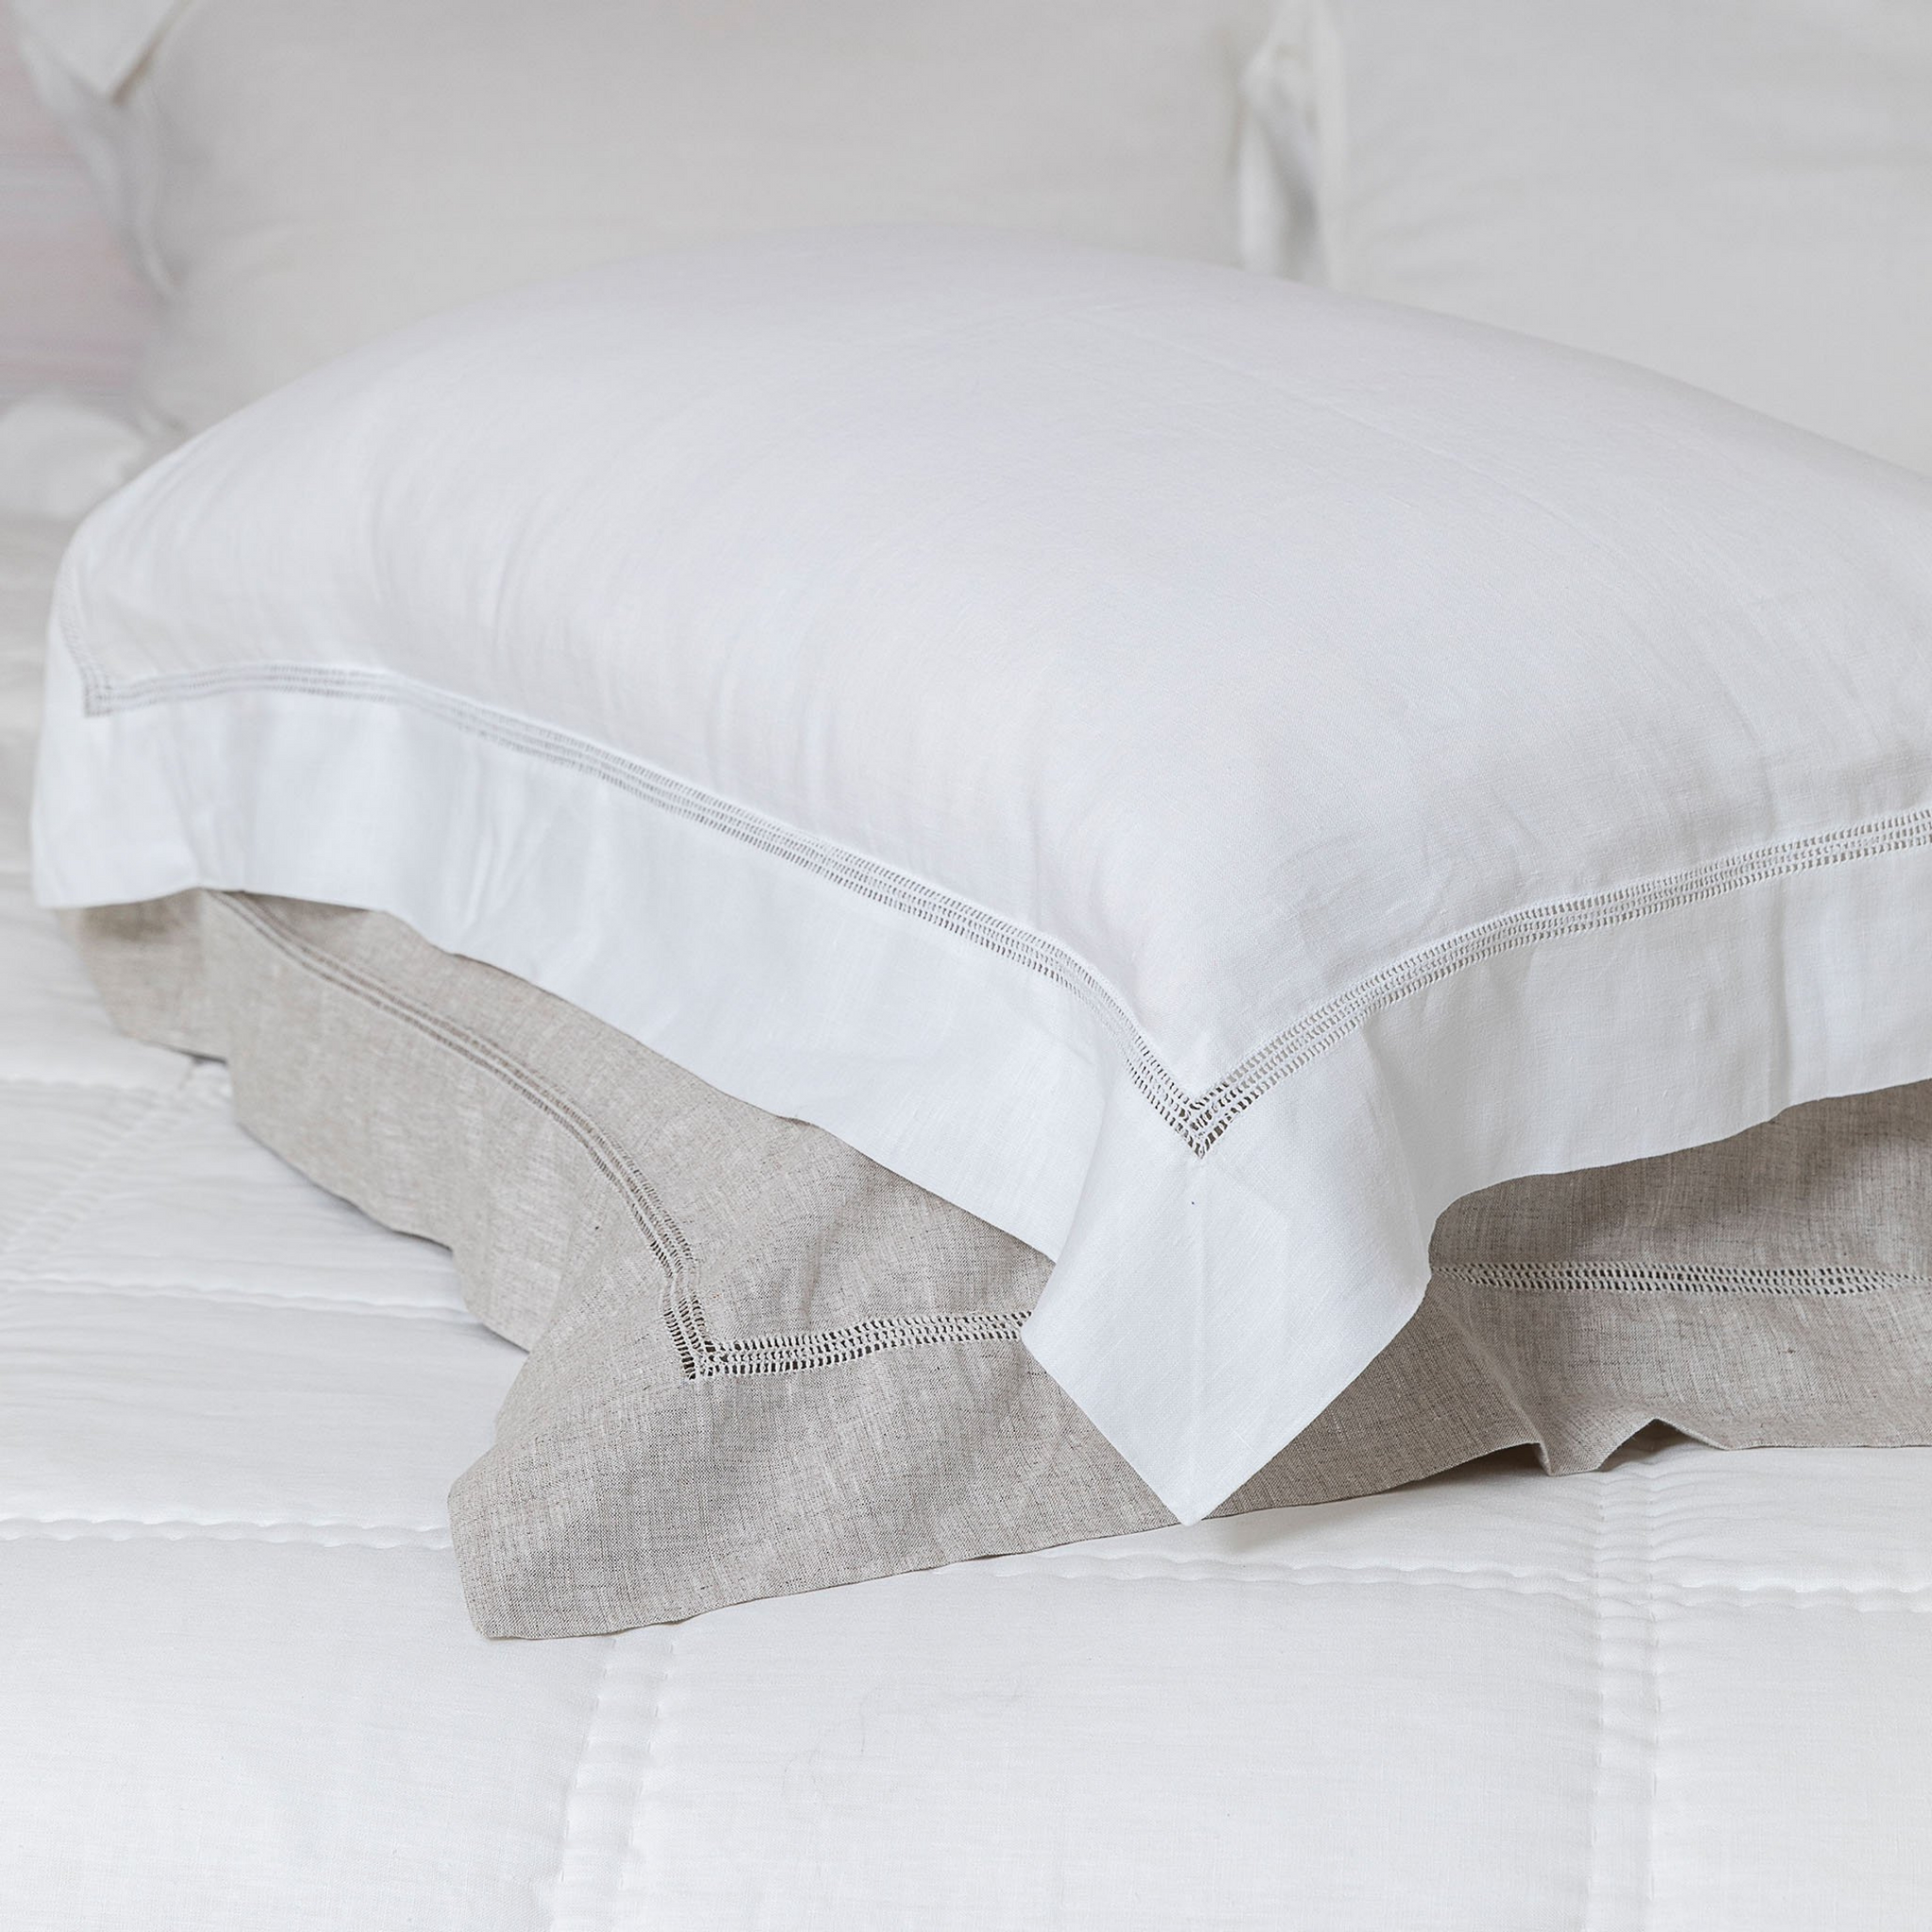 Hemstitched Linen Pillowcase Set Oxford Style Super soft